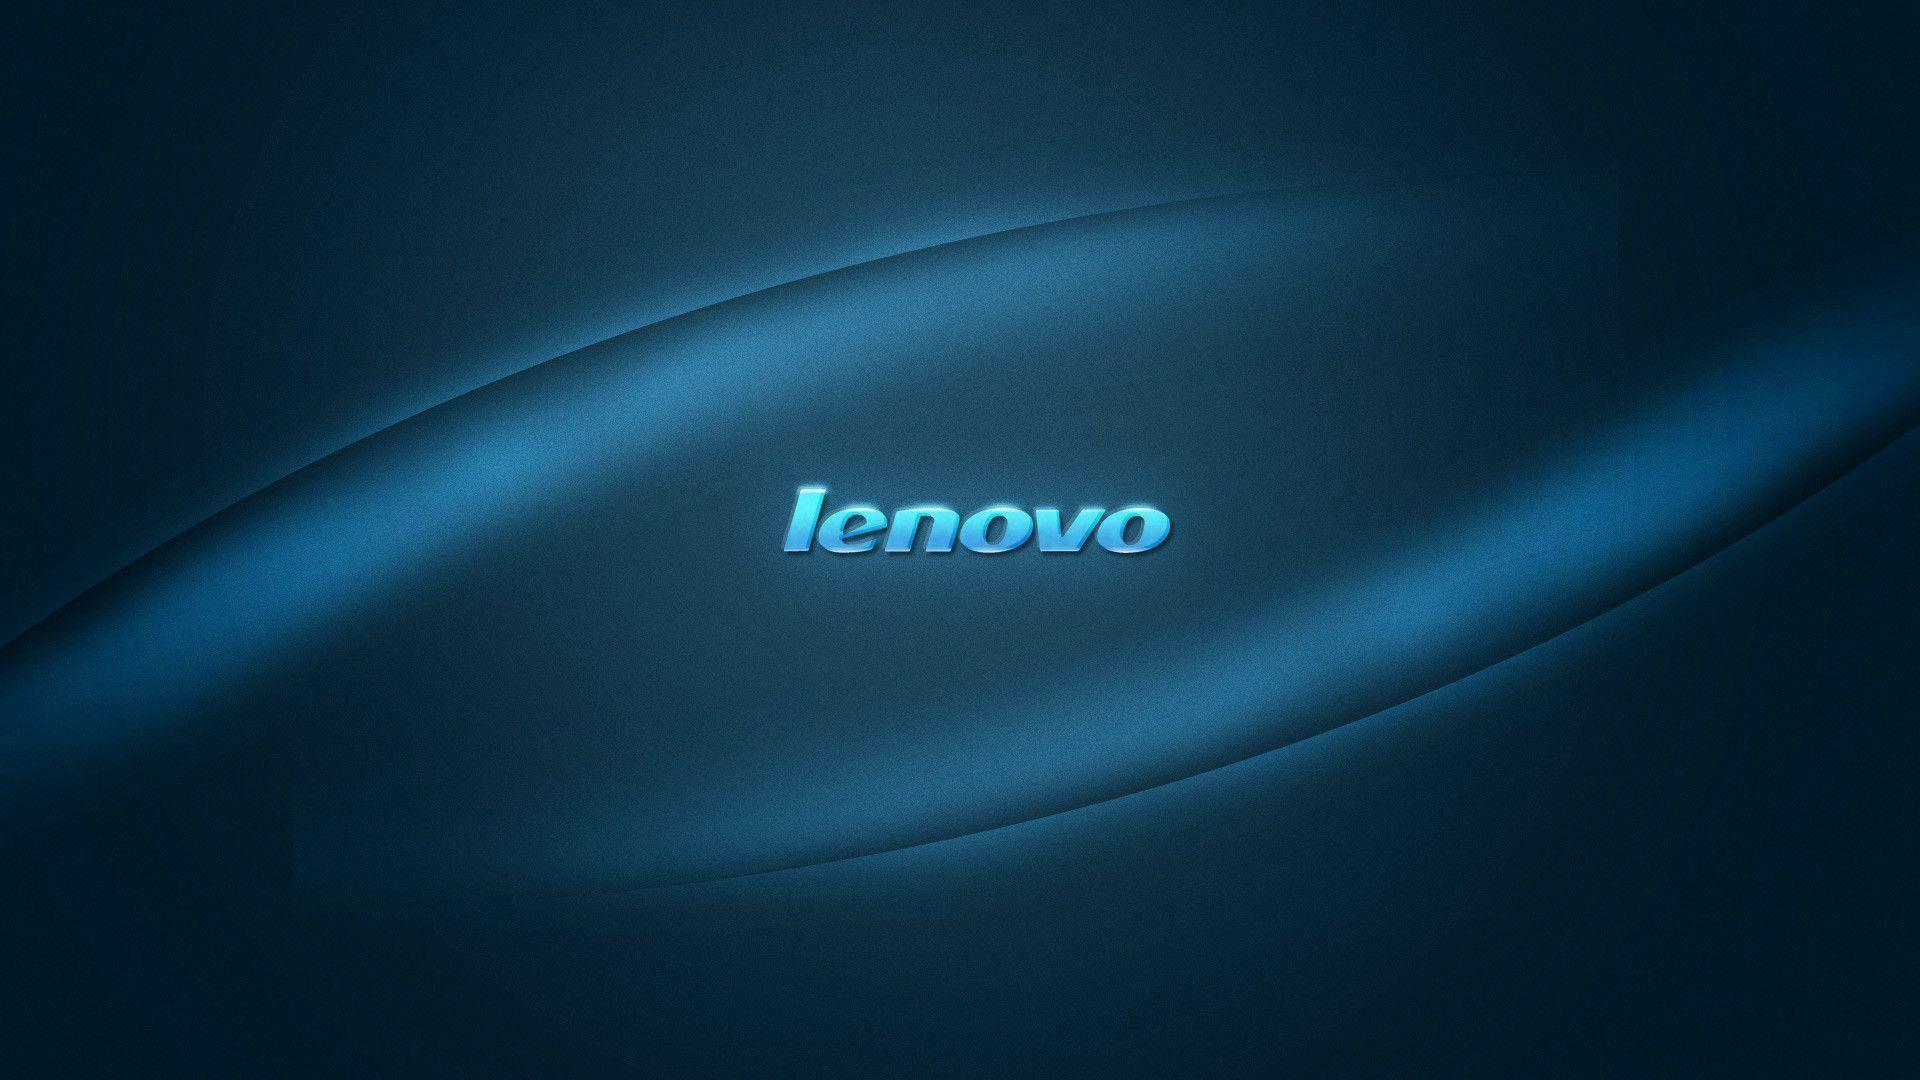 Lenovo Laptop Wallpapers Top Free Lenovo Laptop Backgrounds Wallpaperaccess